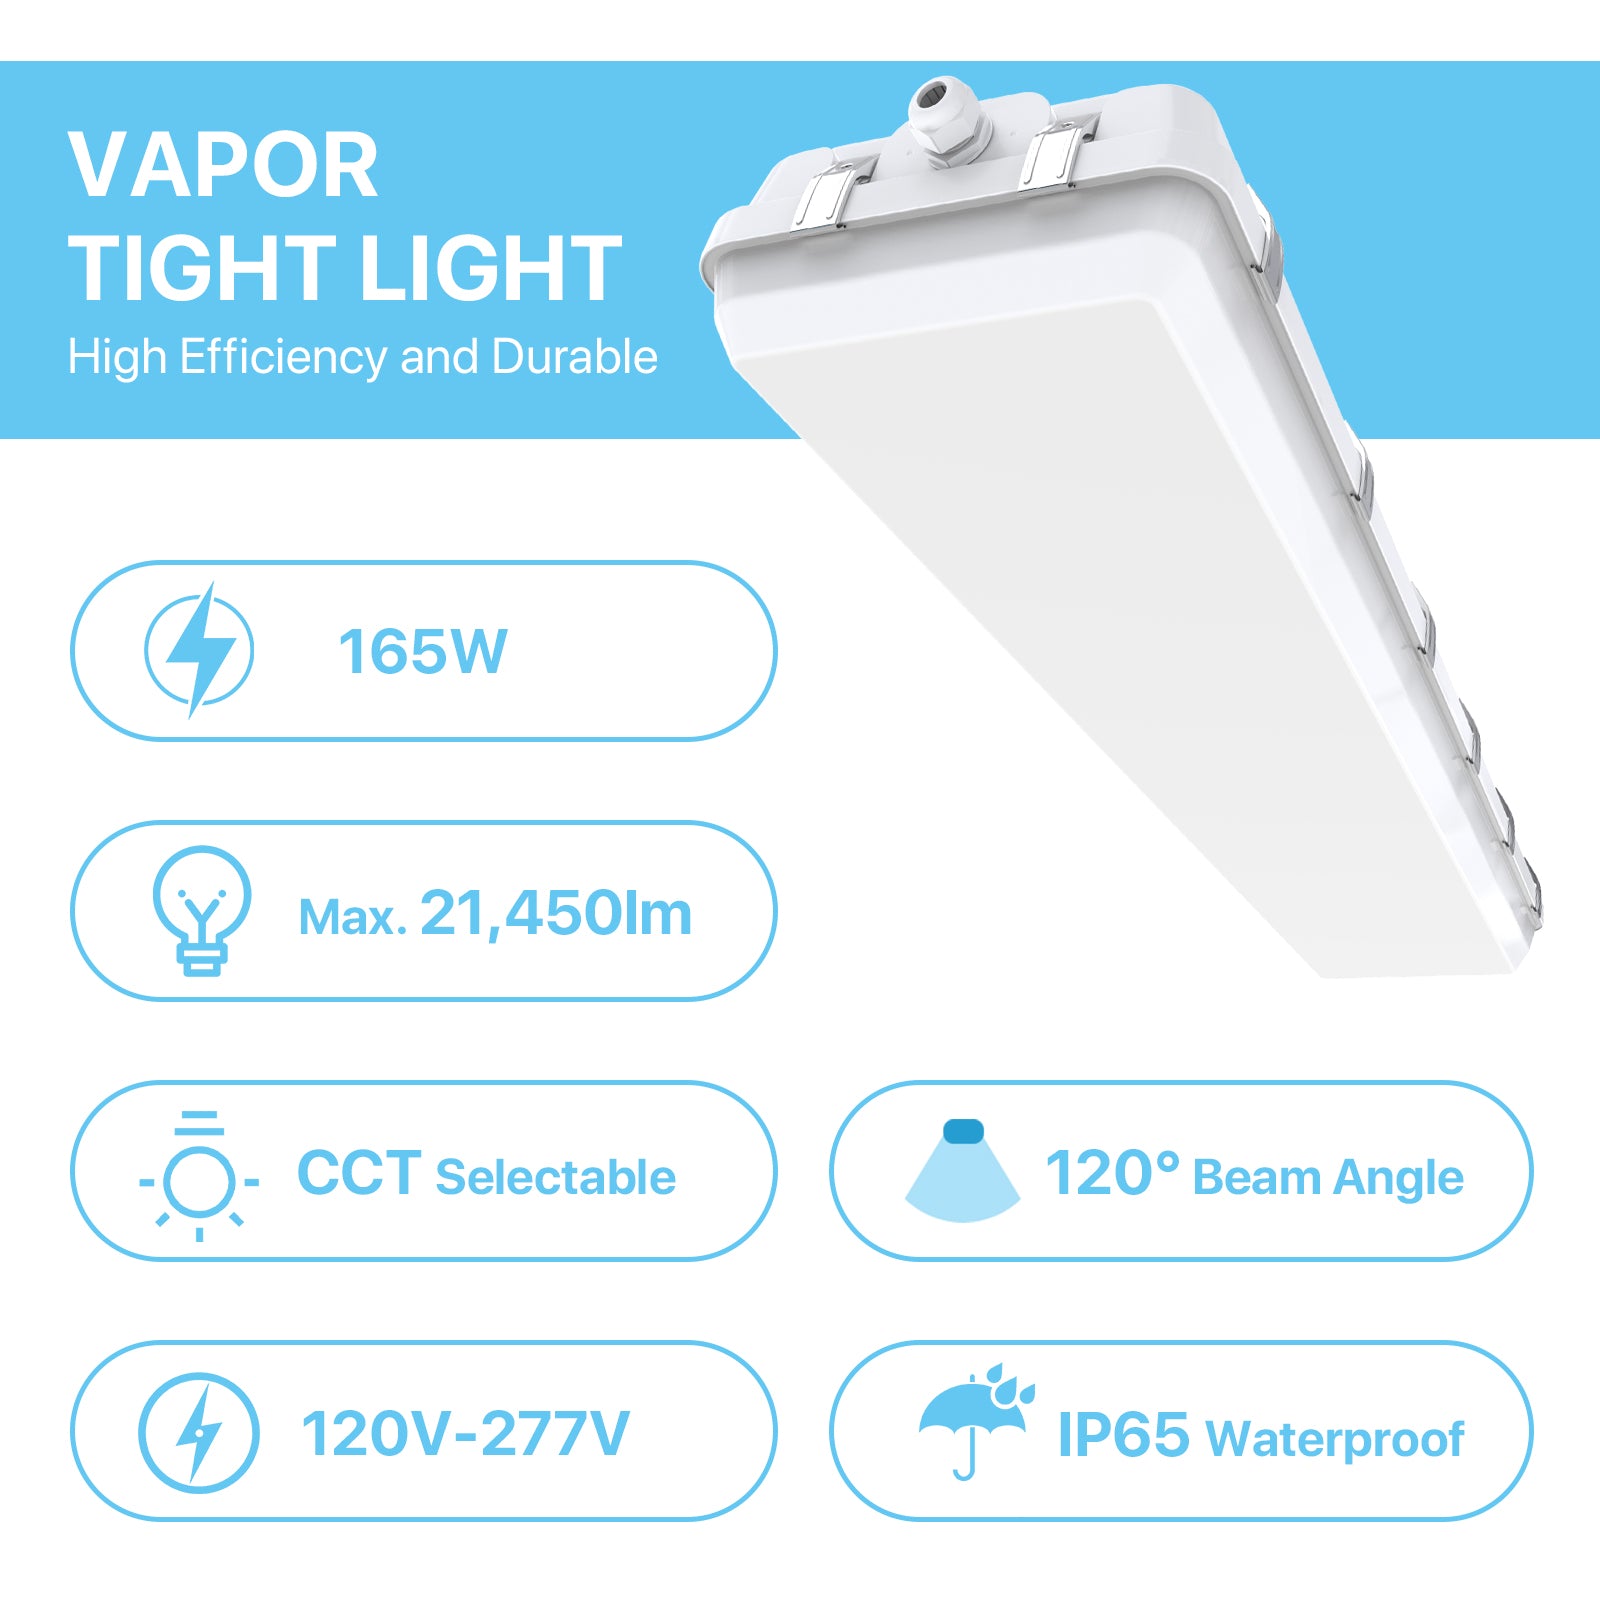 Wholesale VTW Vapor Tight Light Light, 165 Watt, Output 120-277V, 0-10V Dimmable for Commercial Kitchen, Food processing Lighting, NSF Certified.